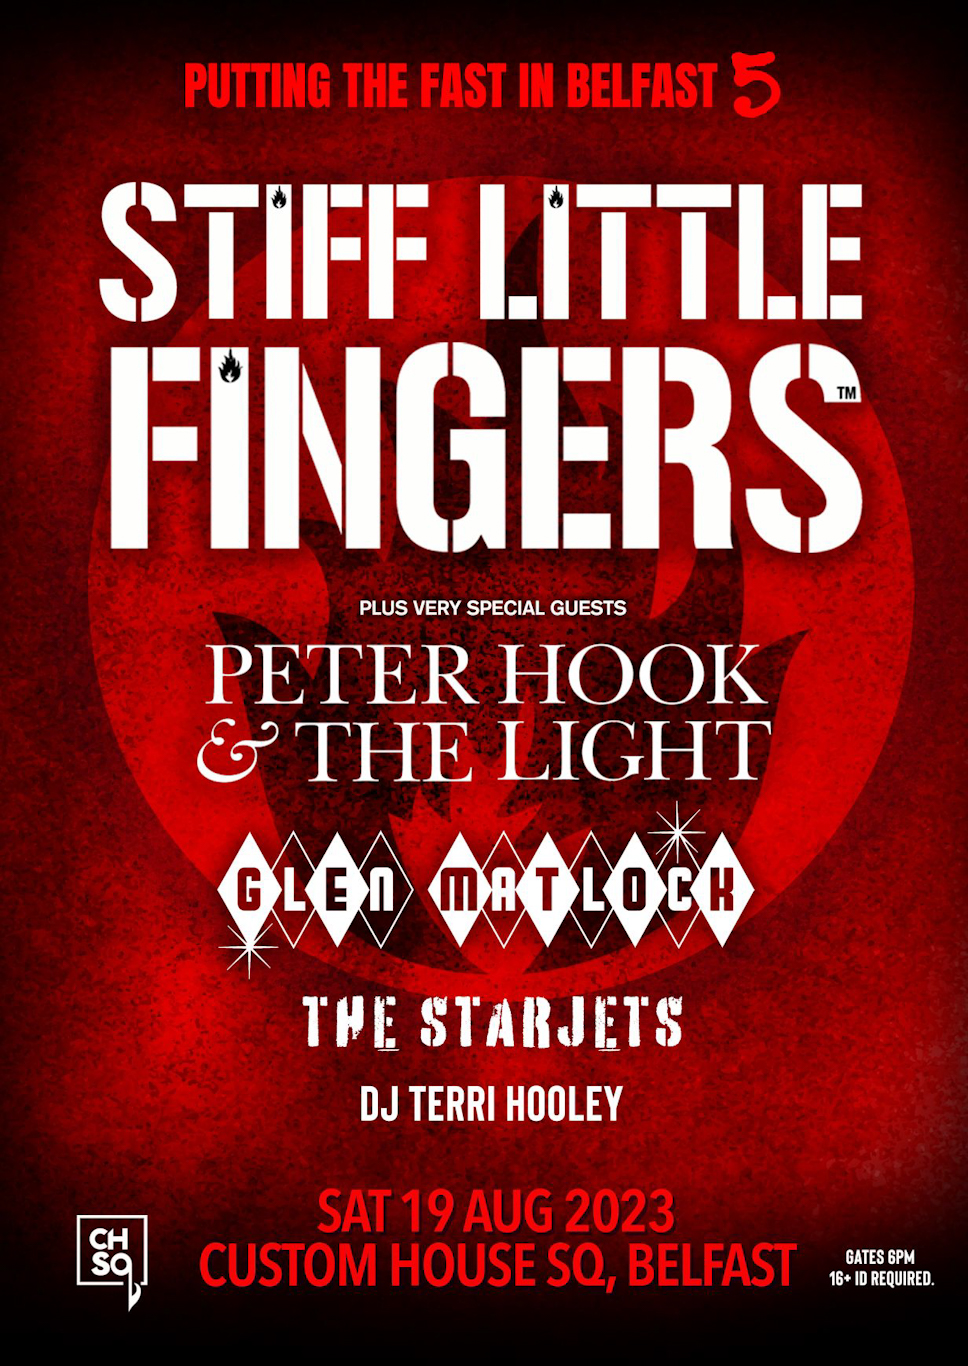 STIFF LITTLE FINGERS announce headline Belfast show at Custom House Square